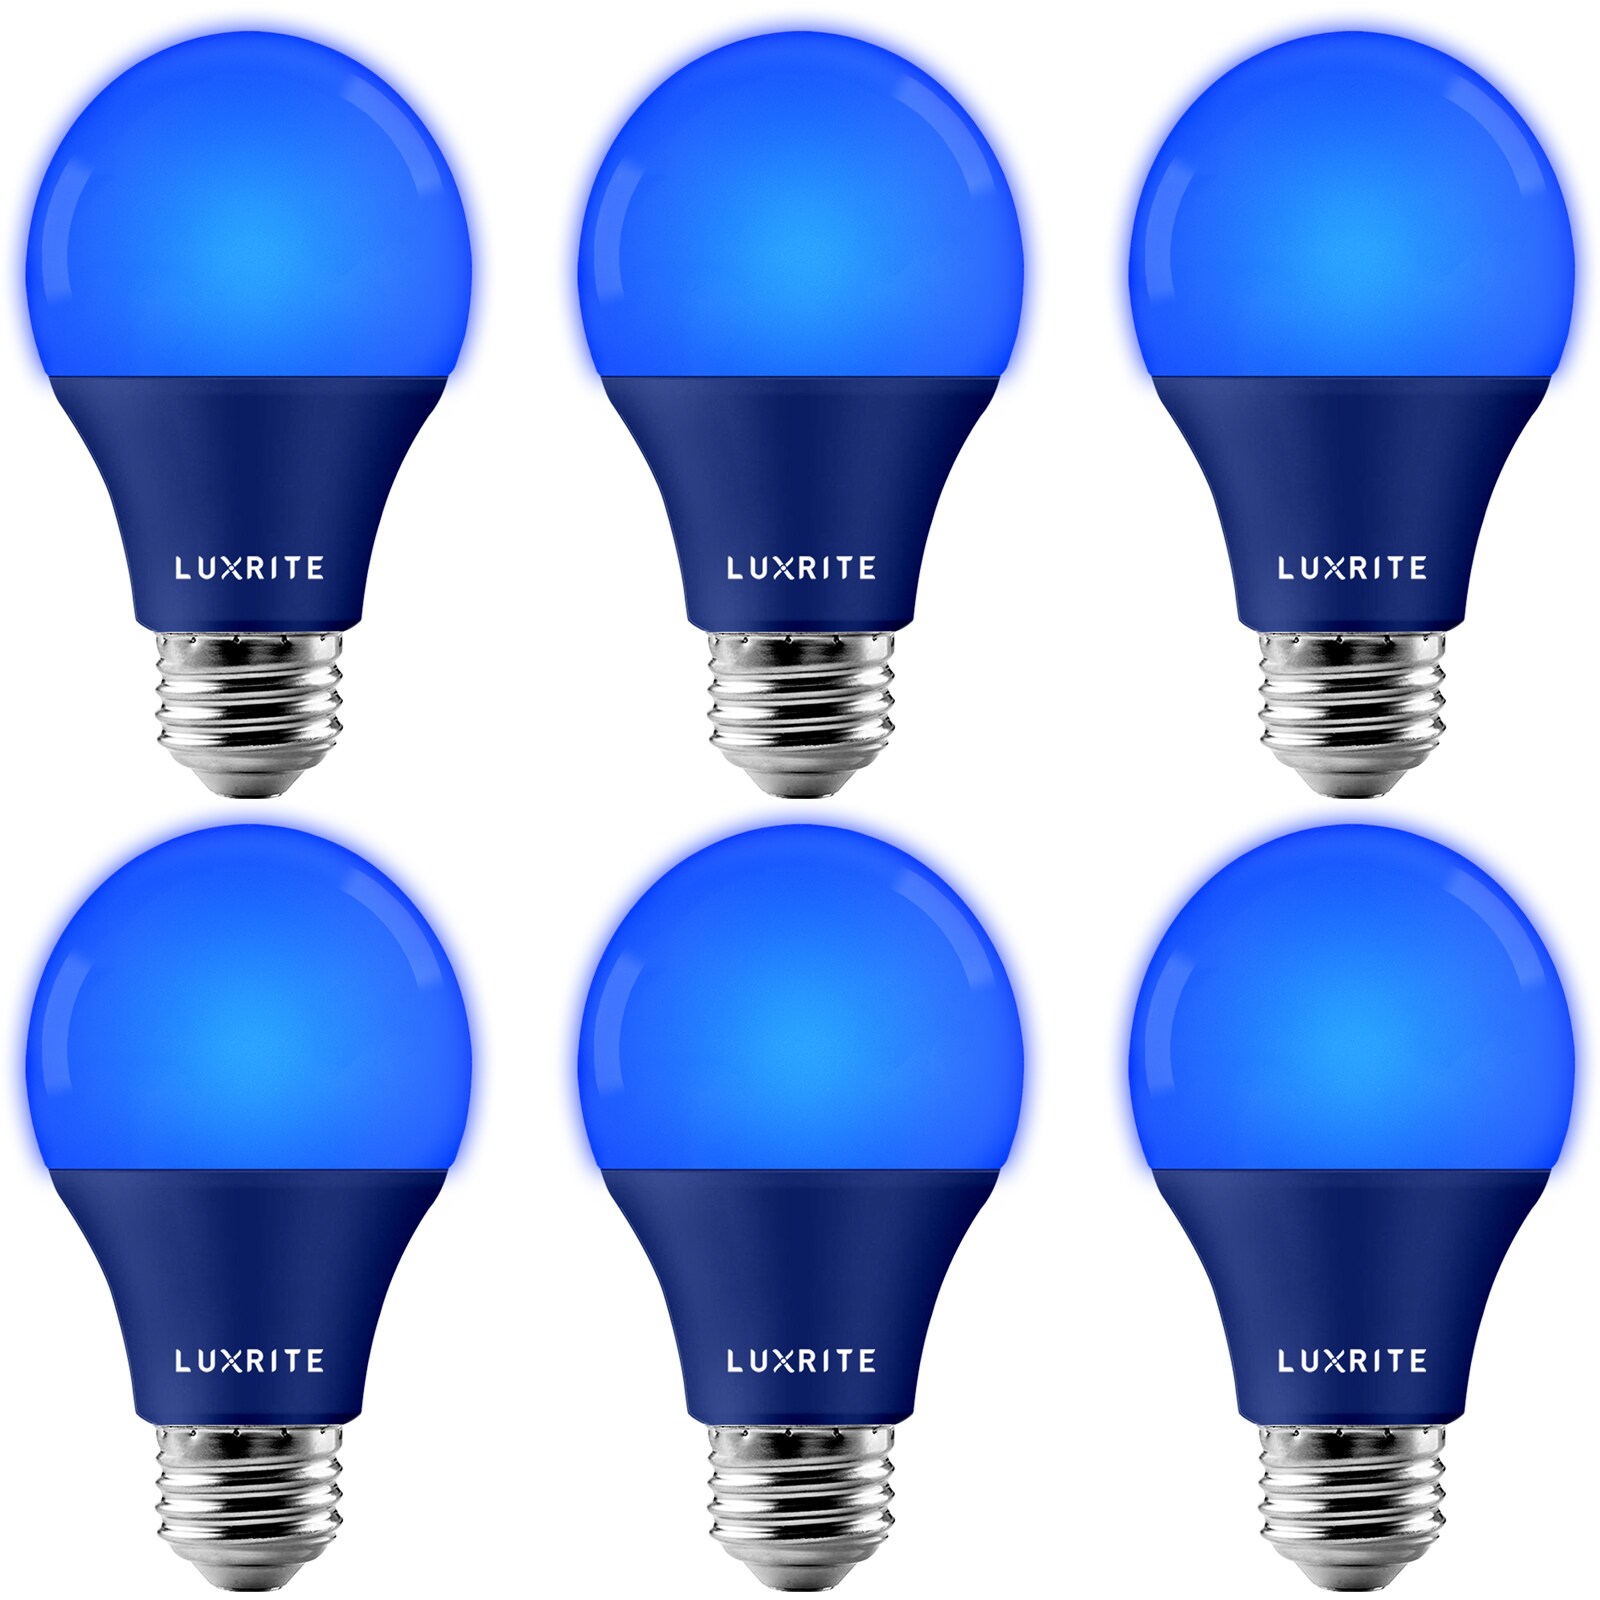 Dimmable A19 Light Bulbs E26 Base Blue Bulbs to Show Support for Police Blue LED Bulb 9W 60 Watt Equivalent UL Listed Pack of 2 NOVELUX Blue Light Bulb 